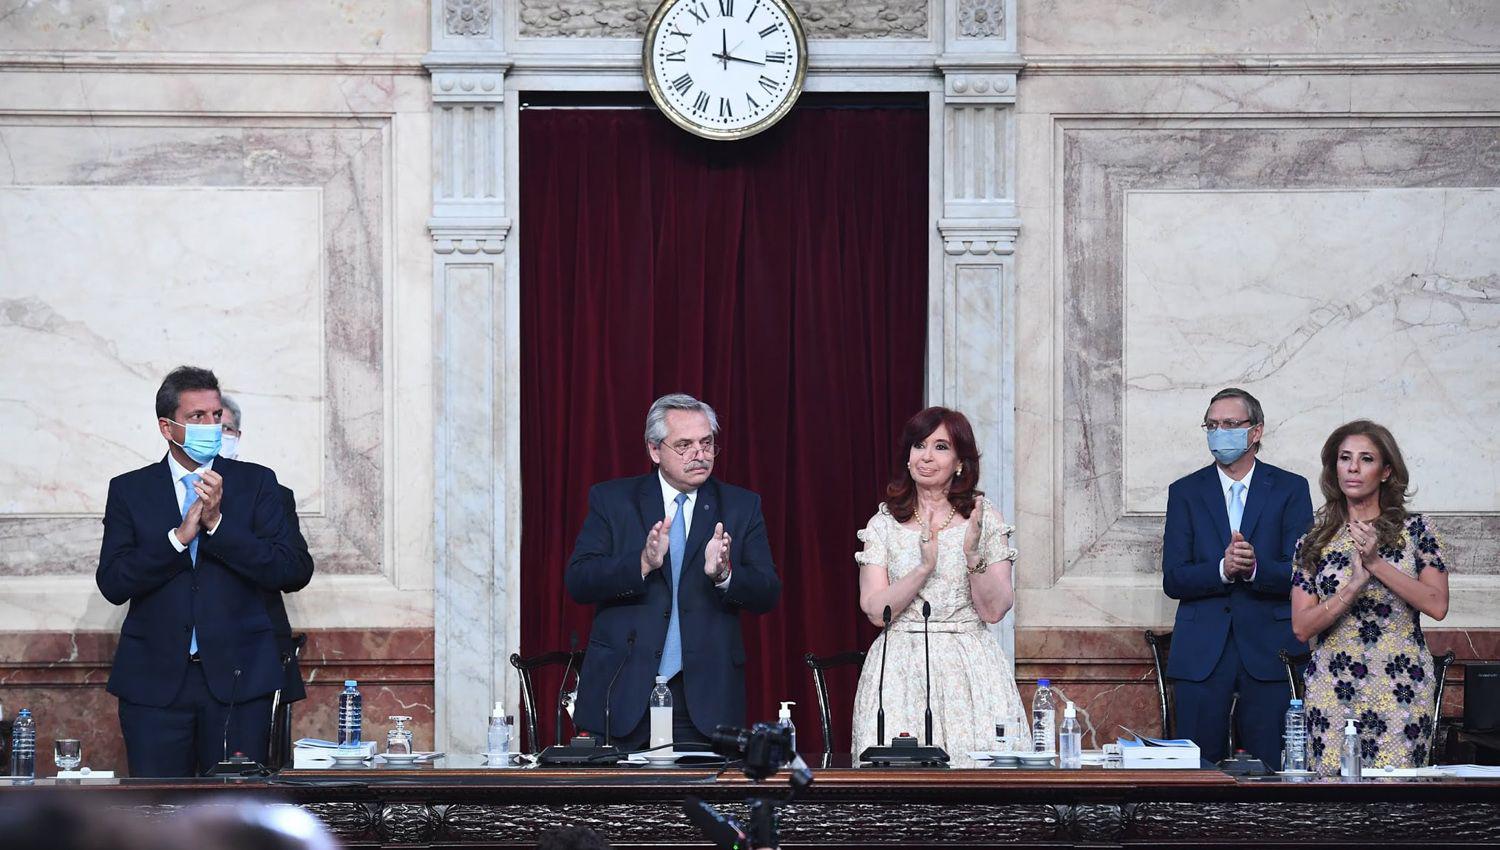 IMaacuteGENES  El gobernador y la senadora Zamora acompantildearon al presidente Alberto Fernaacutendez en la Asamblea Legislativa